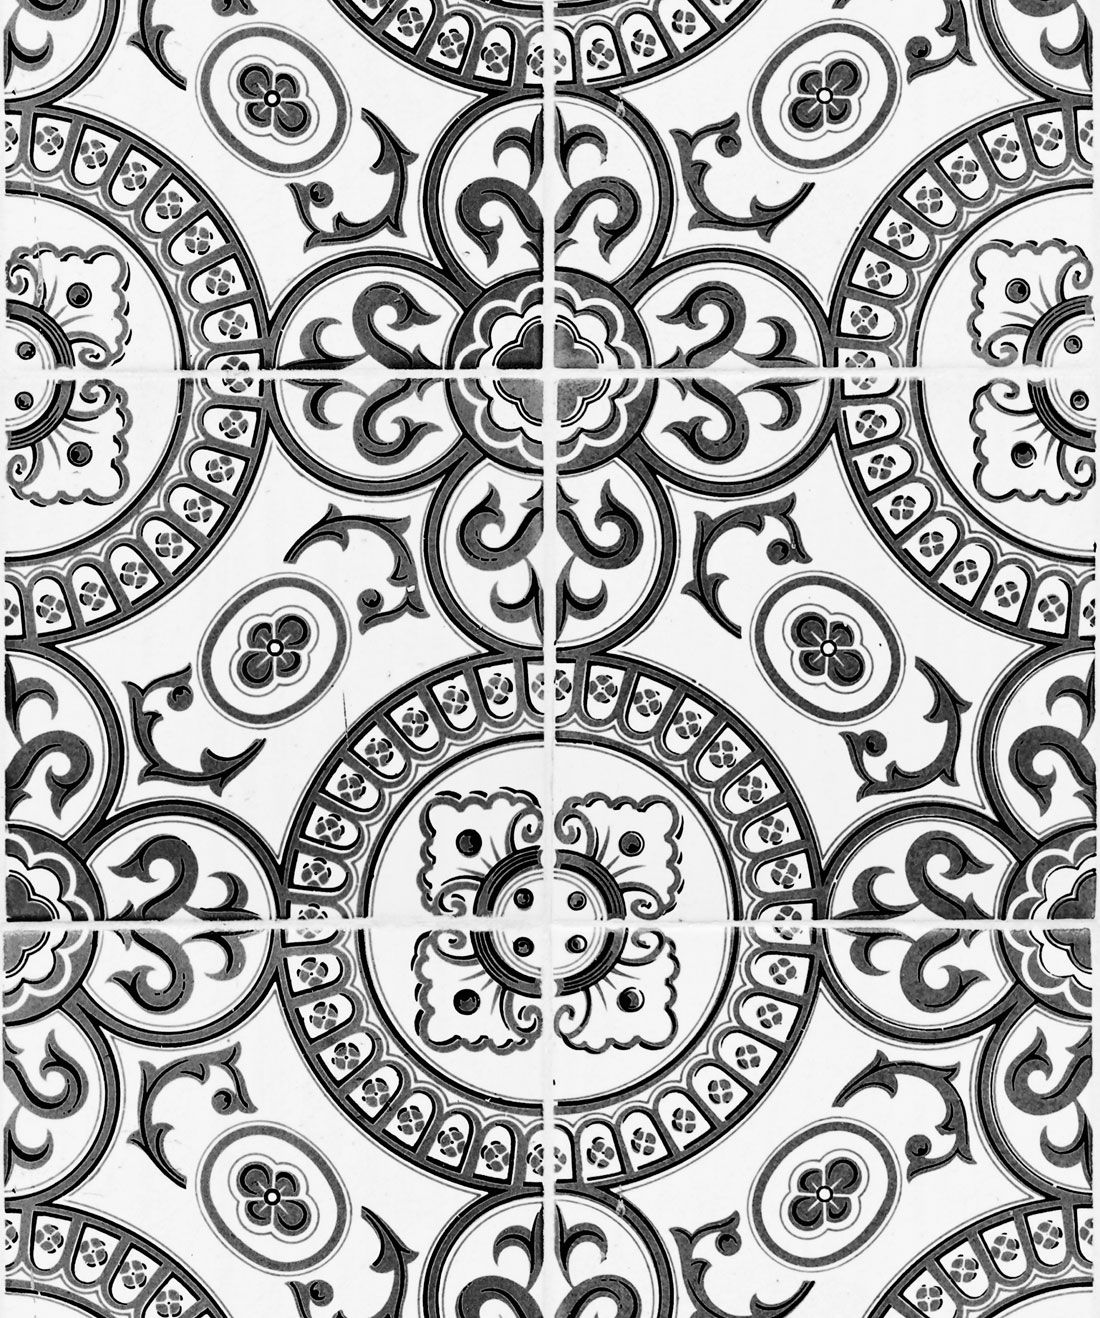 Ceramic Wallpaper and Wallpaper Effect Tiles